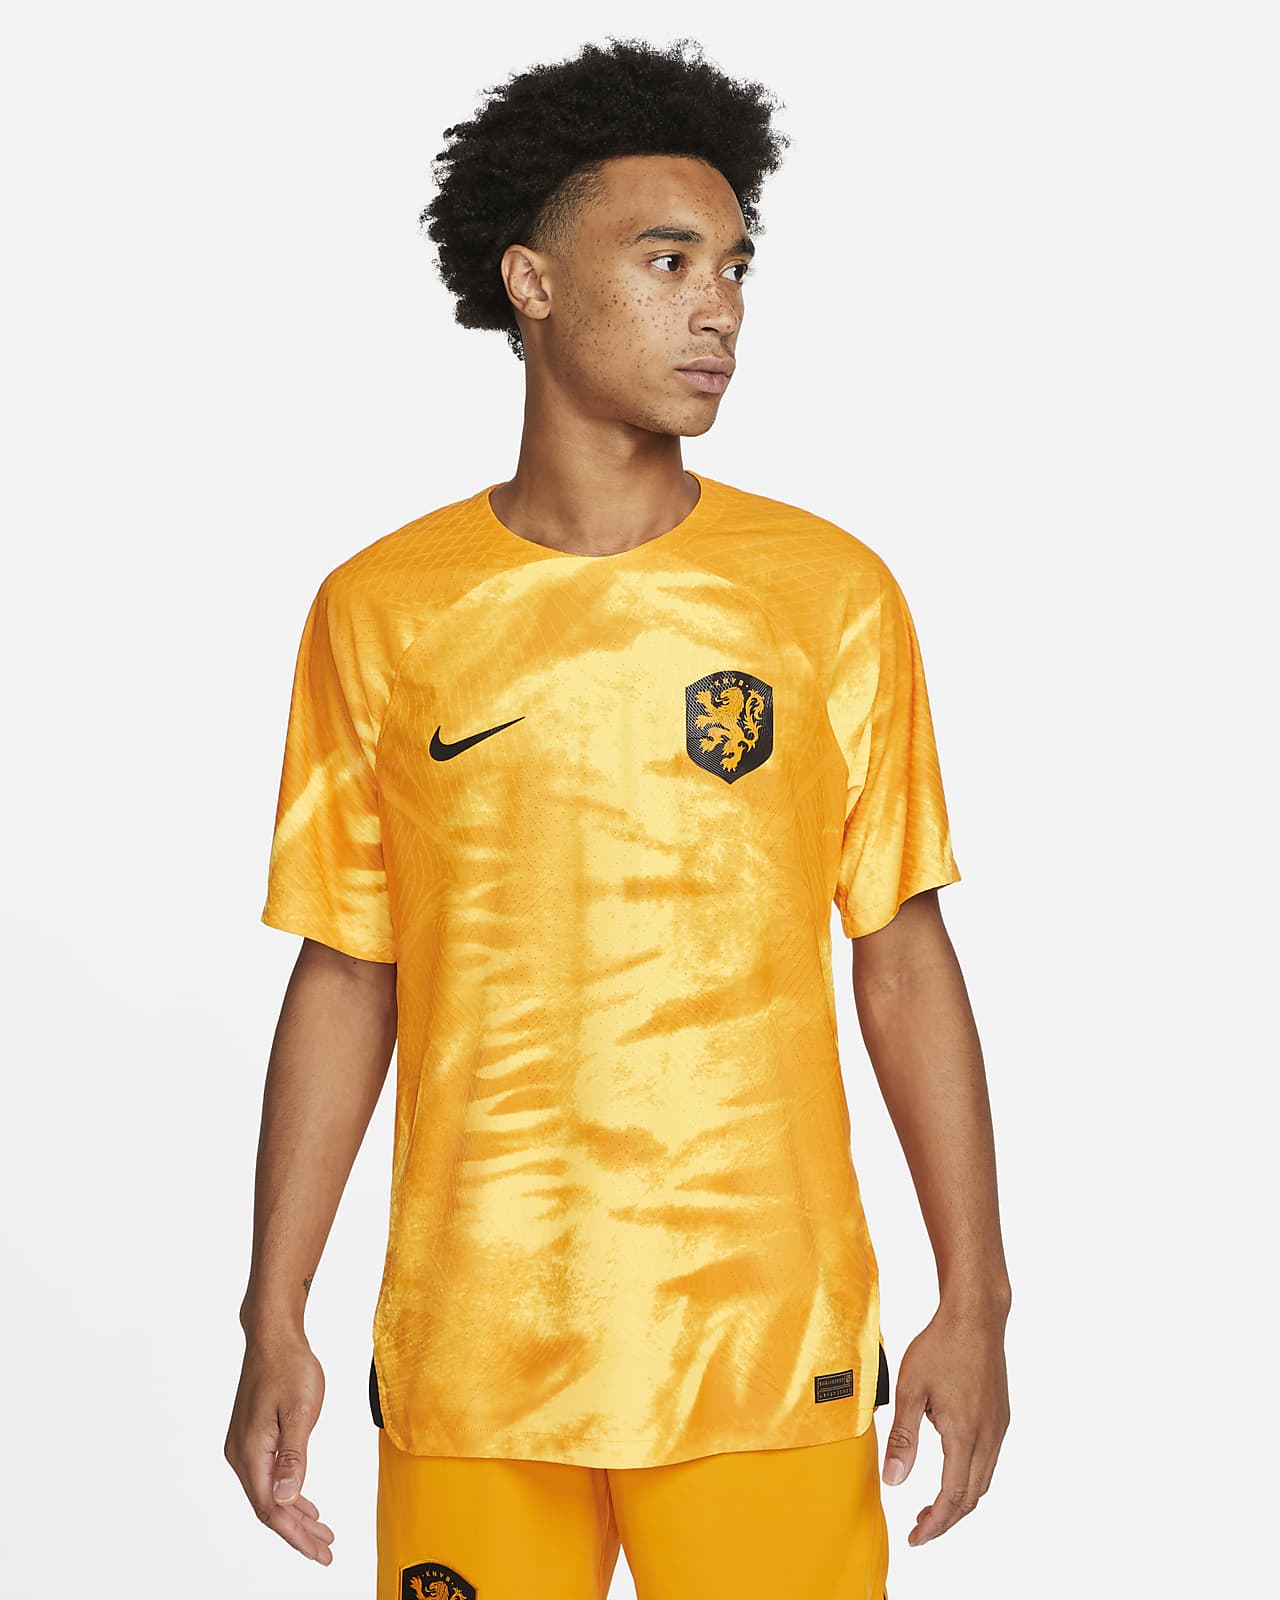 Raad Contract werkzaamheid Nederland 2022/23 Match Thuis Nike Dri-FIT ADV voetbalshirt voor heren. Nike  NL